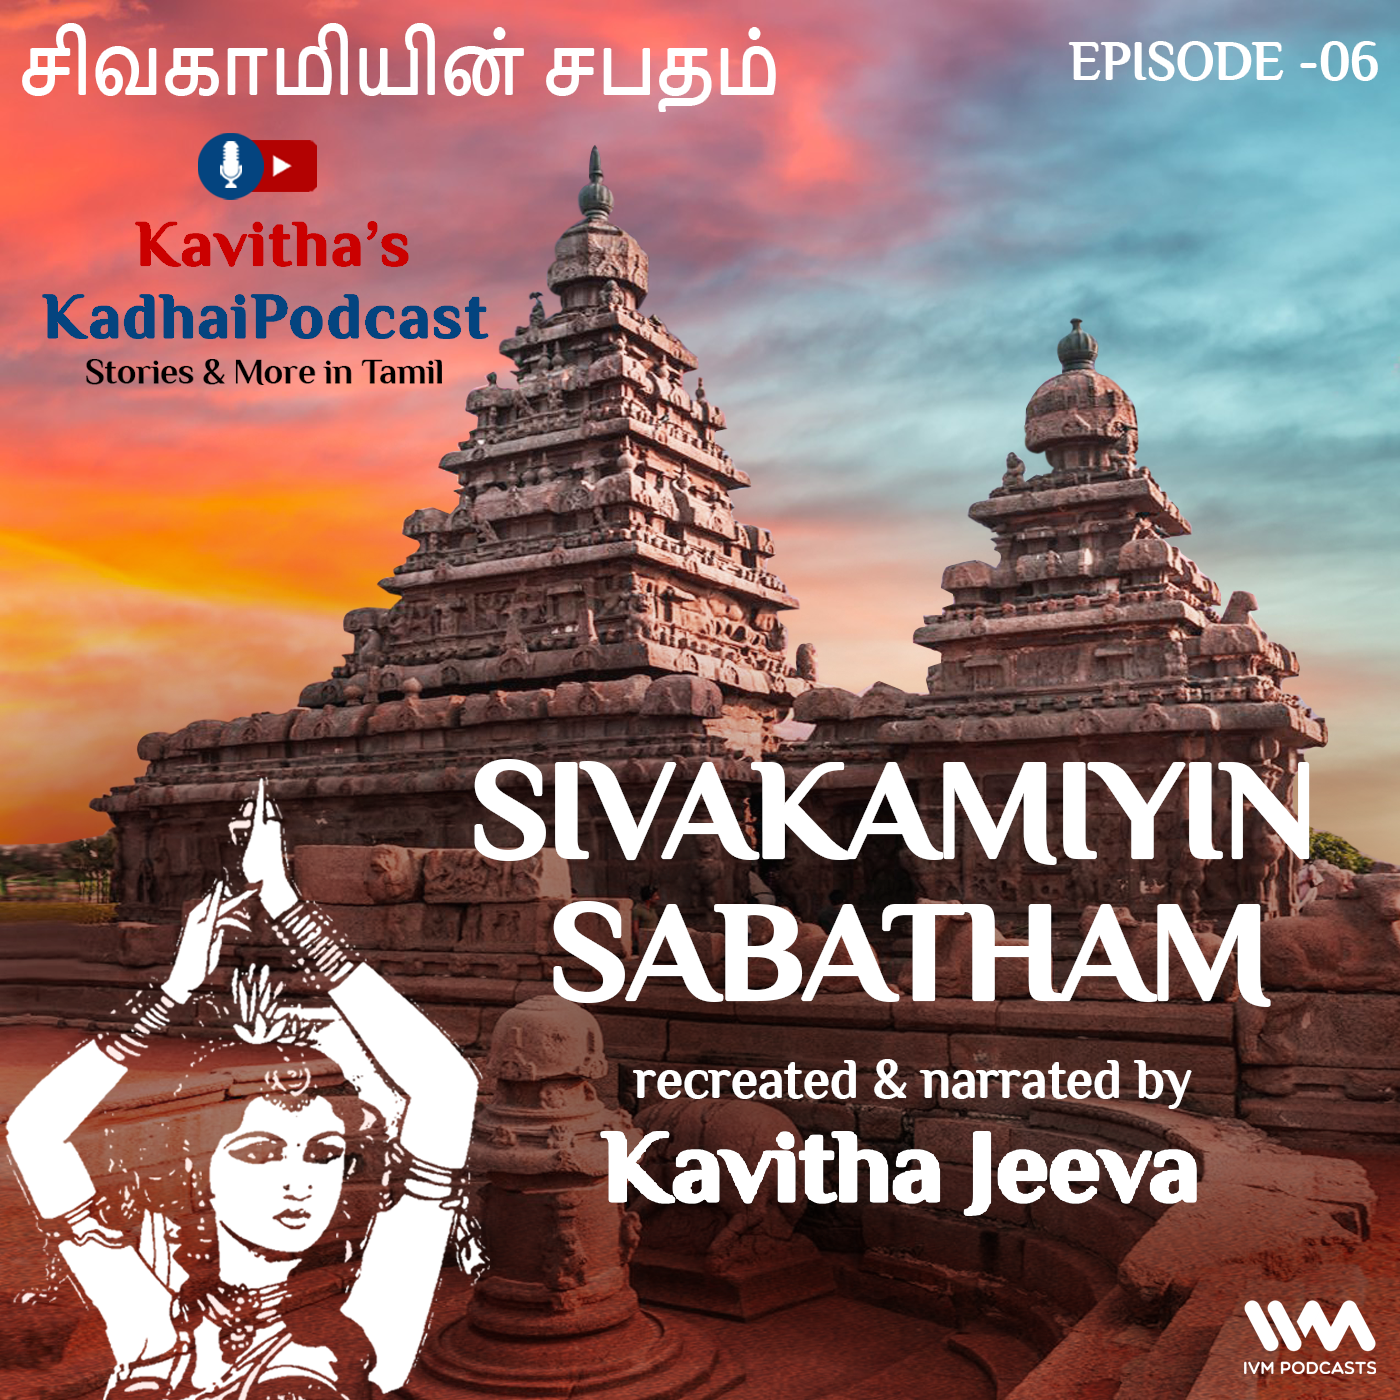 KadhaiPodcast's Sivakamiyin Sabatham - Episode # 6